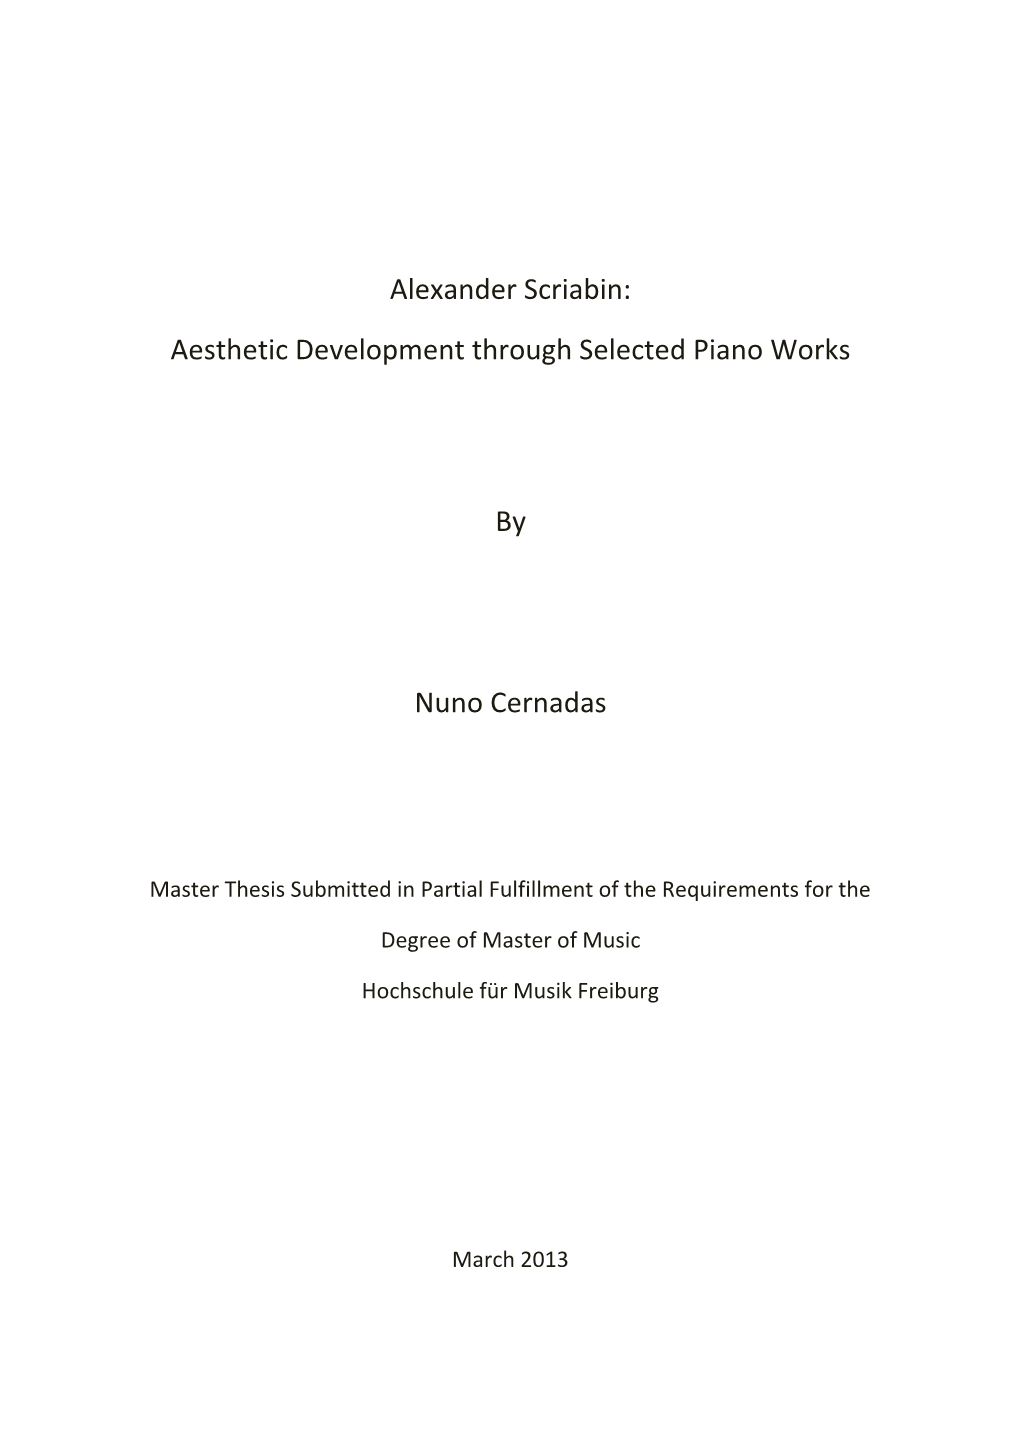 Alexander Scriabin: Aesthetic Development Through Selected Piano Works by Nuno Cernadas